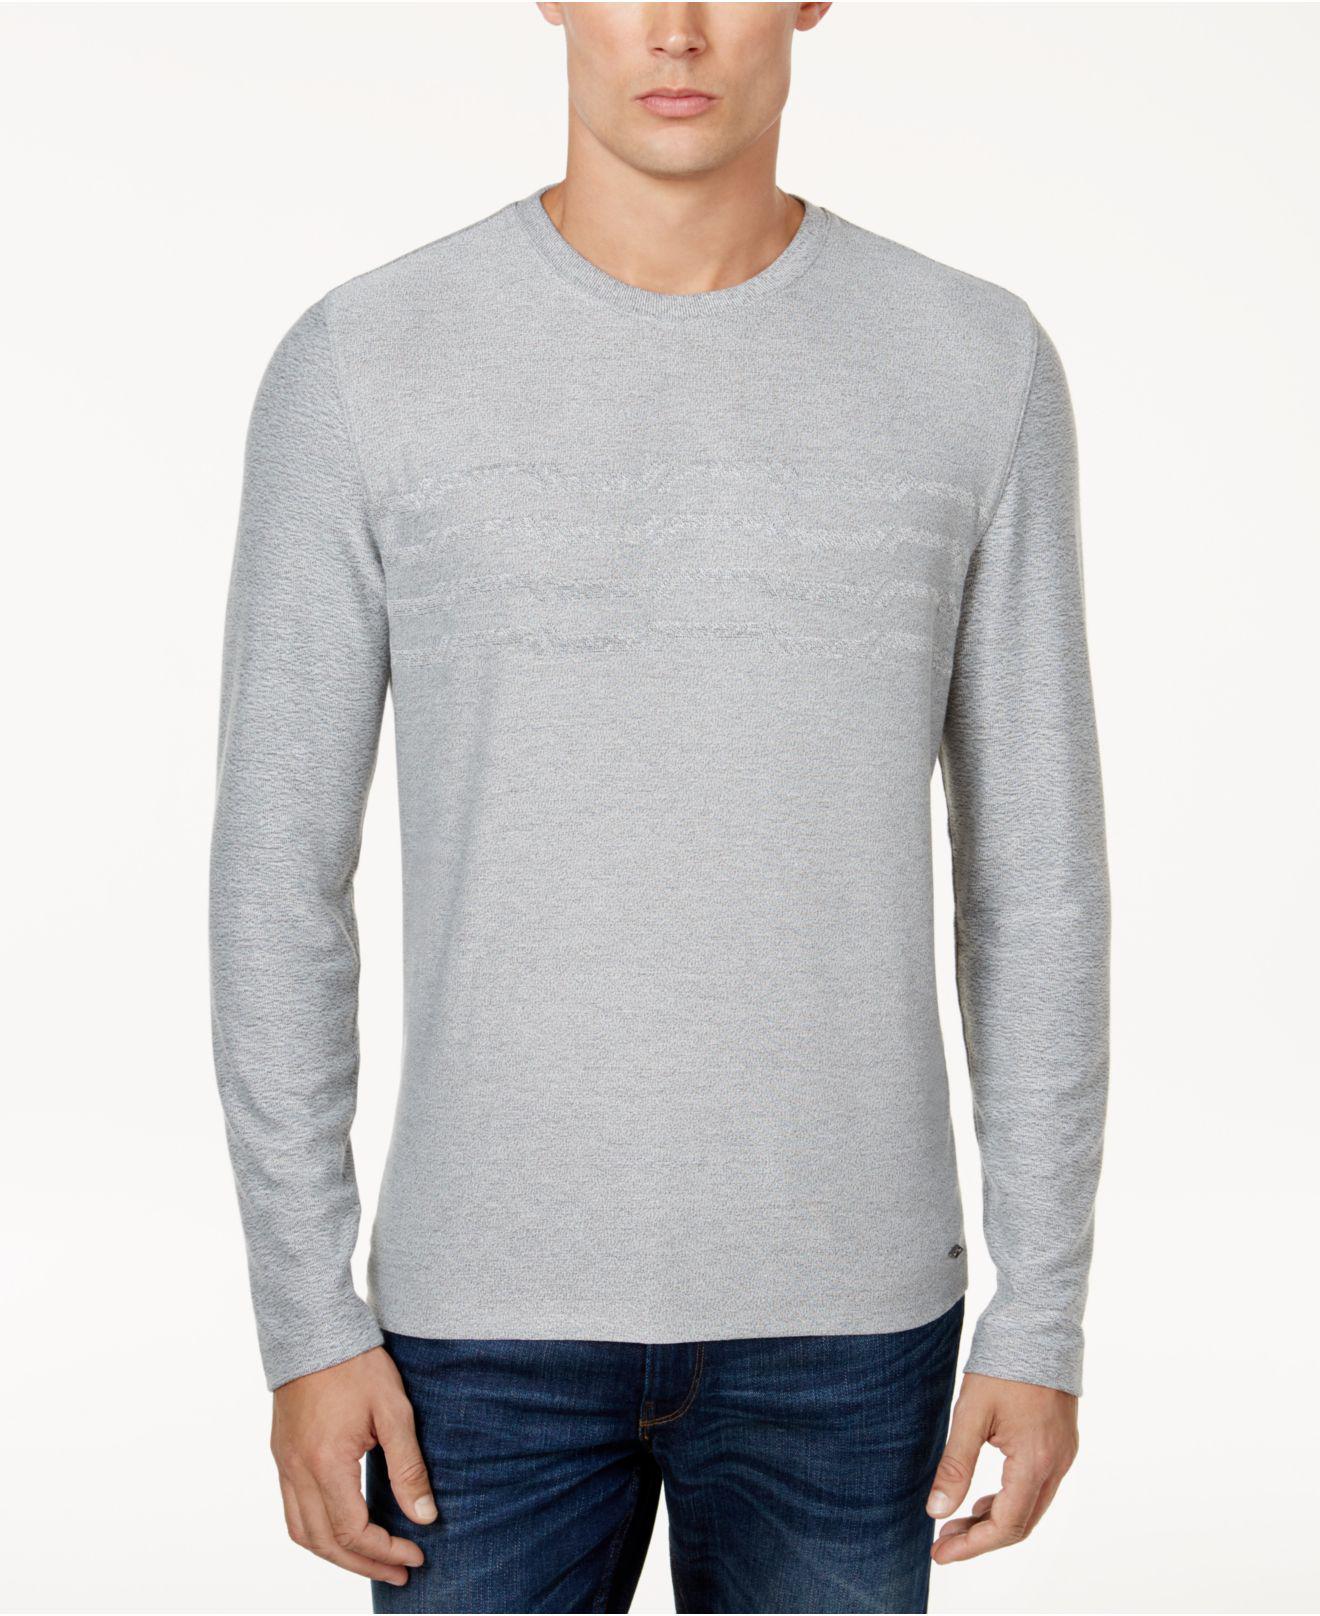 Aliexpress.com : Buy 2015 New Arrival Men's Sweater Supper